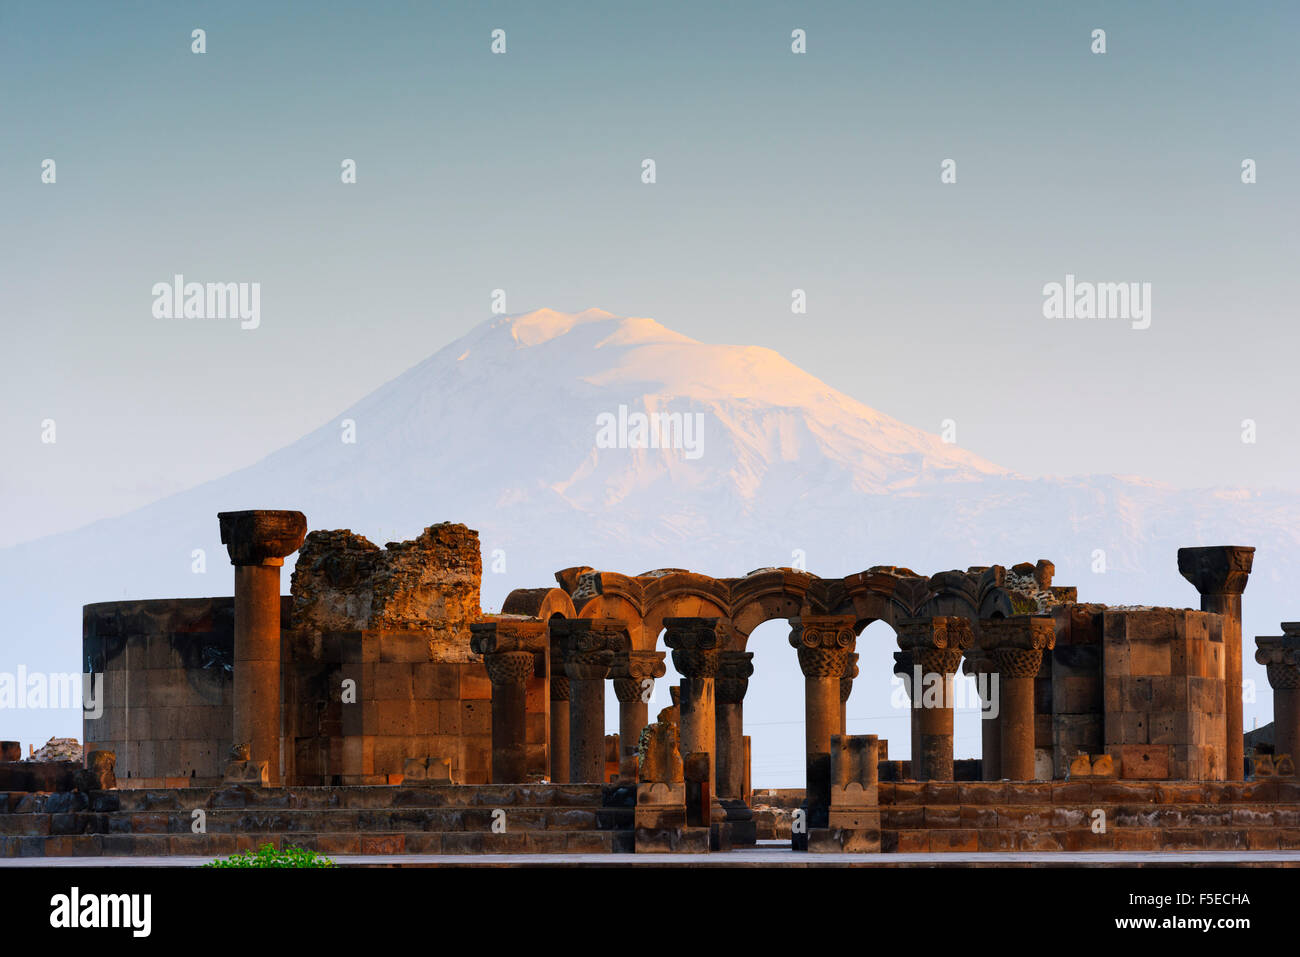 Zvartnots archaeological ruin, UNESCO World Heritage Site, Mount Ararat in Turkey behind, Armenia, Caucasus, Central Asia, Asia Stock Photo